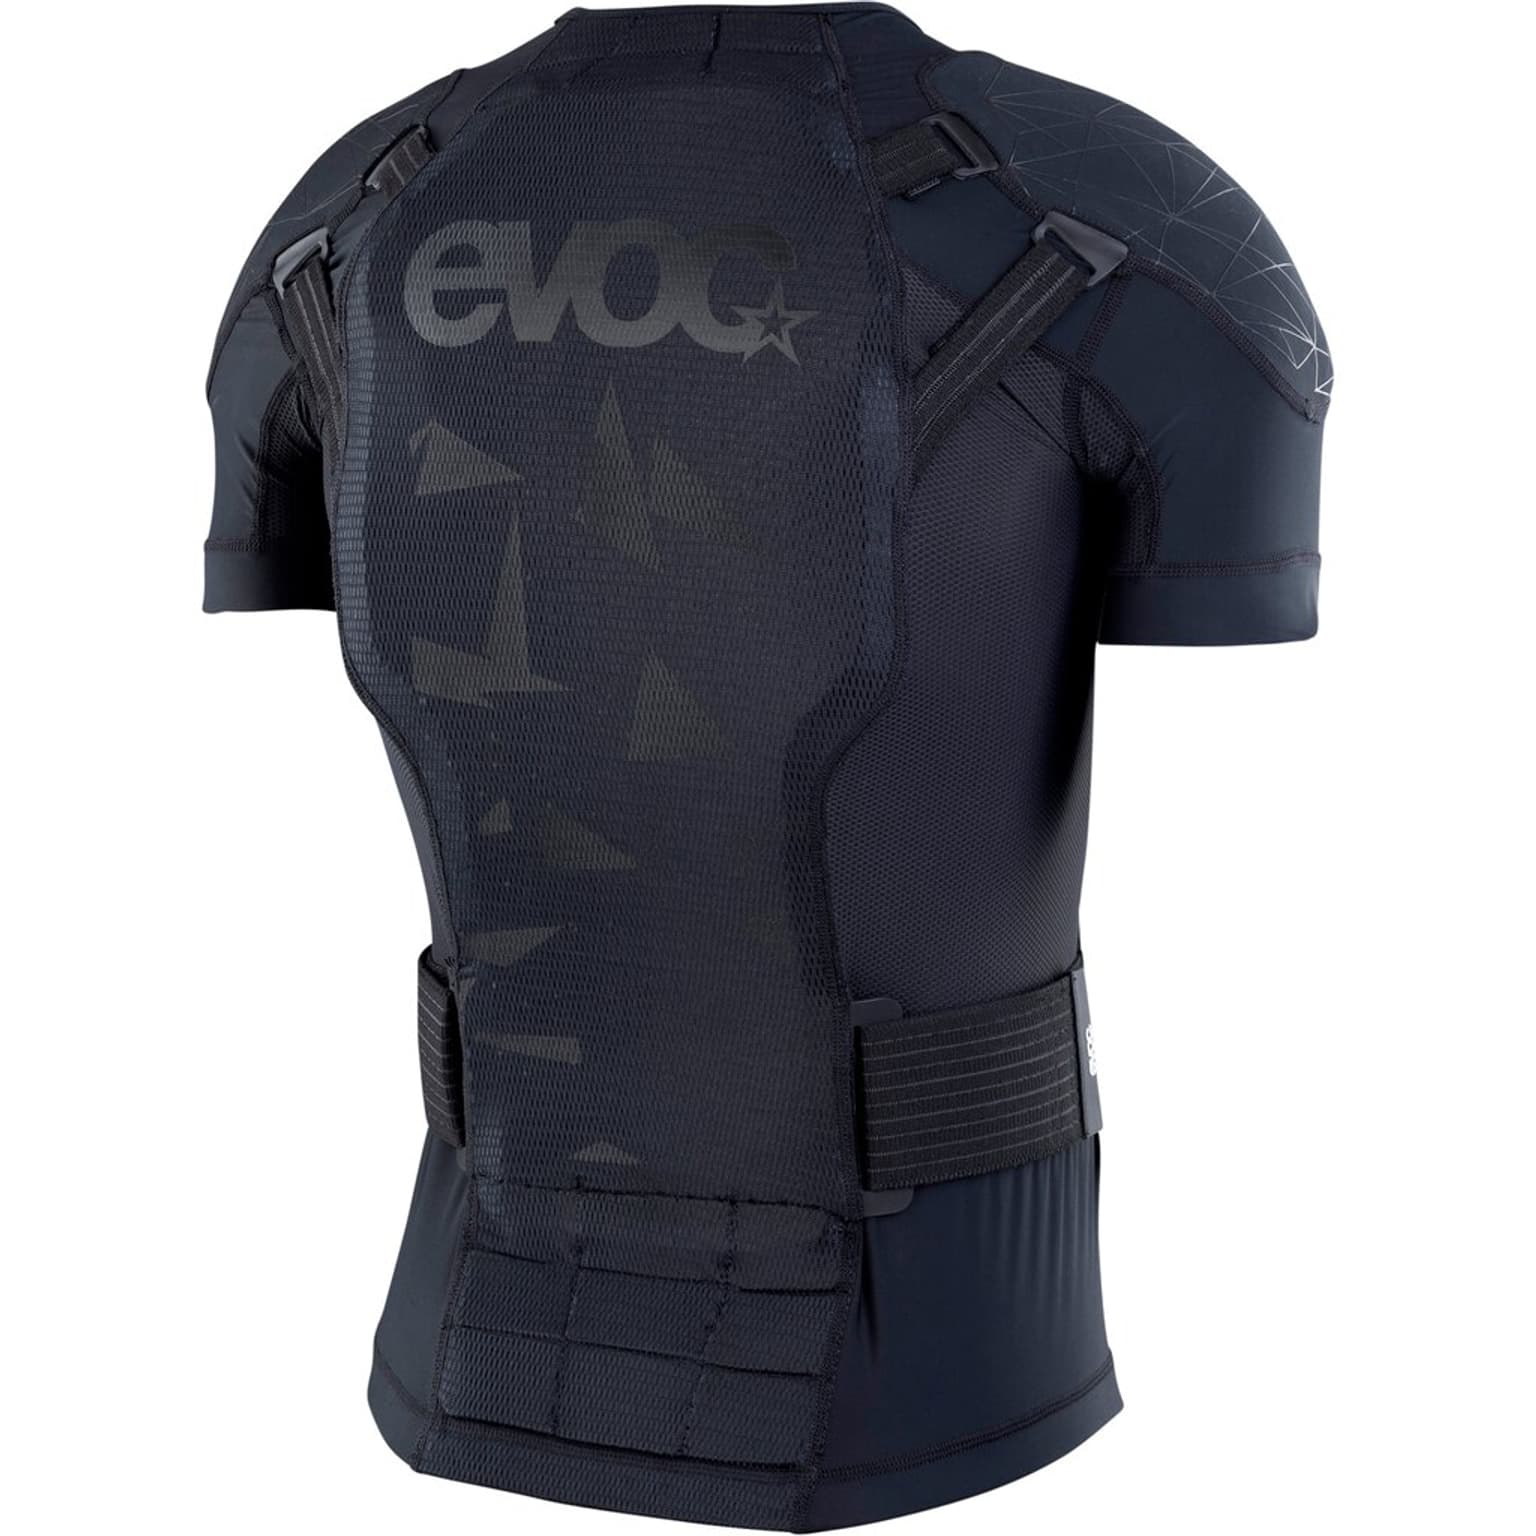 Evoc Evoc Protector Jacket Pro Protektoren schwarz 4